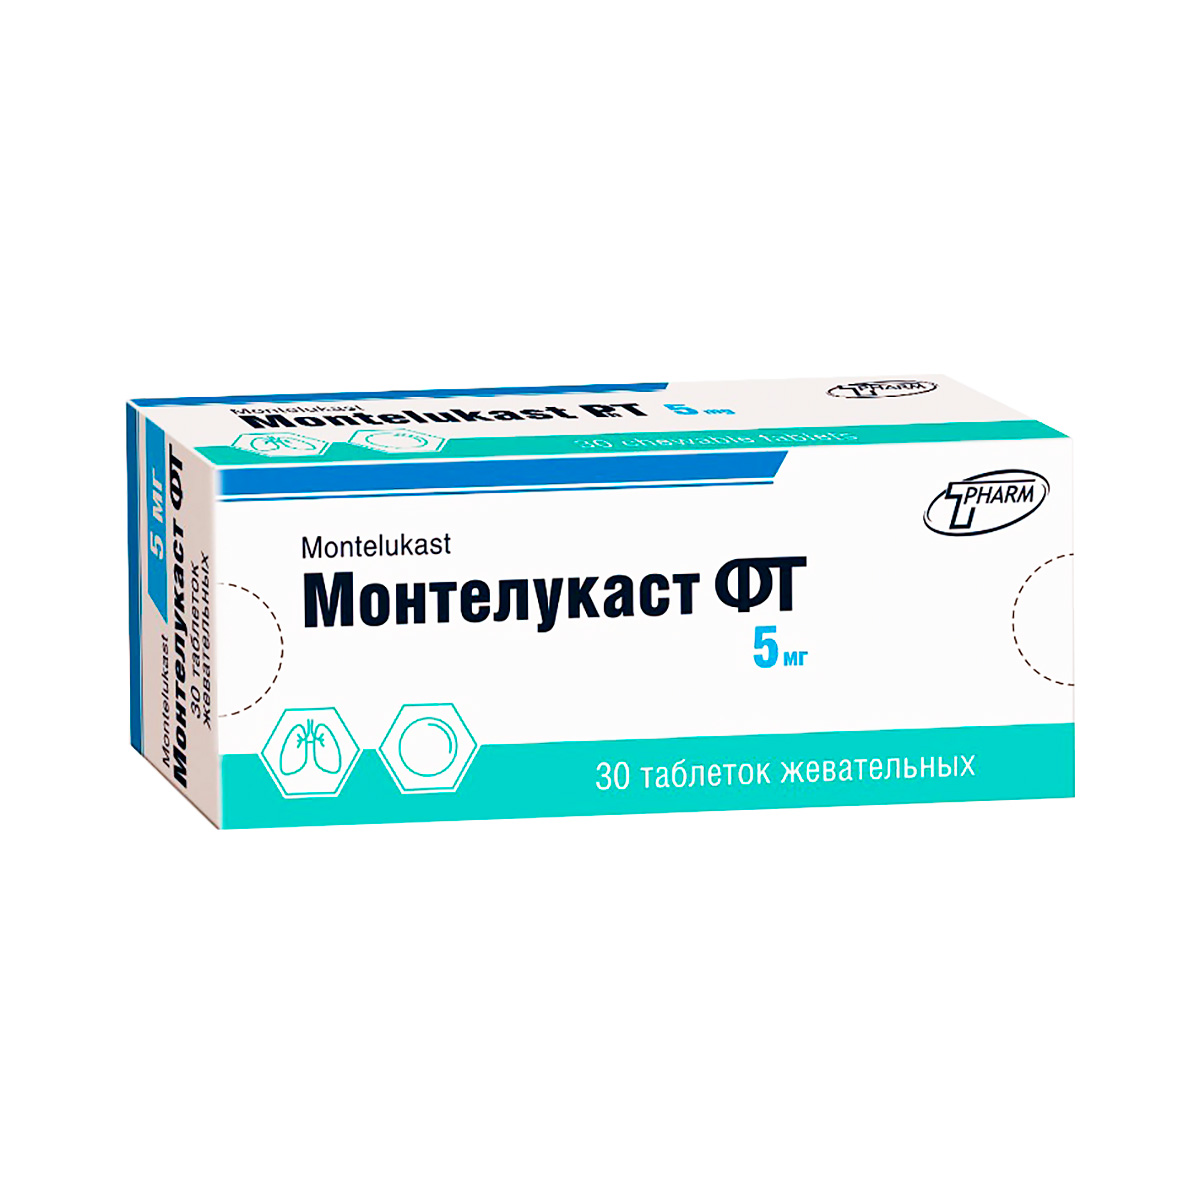 Монтелукаст ФТ 5 мг таблетки жевательные 30 шт